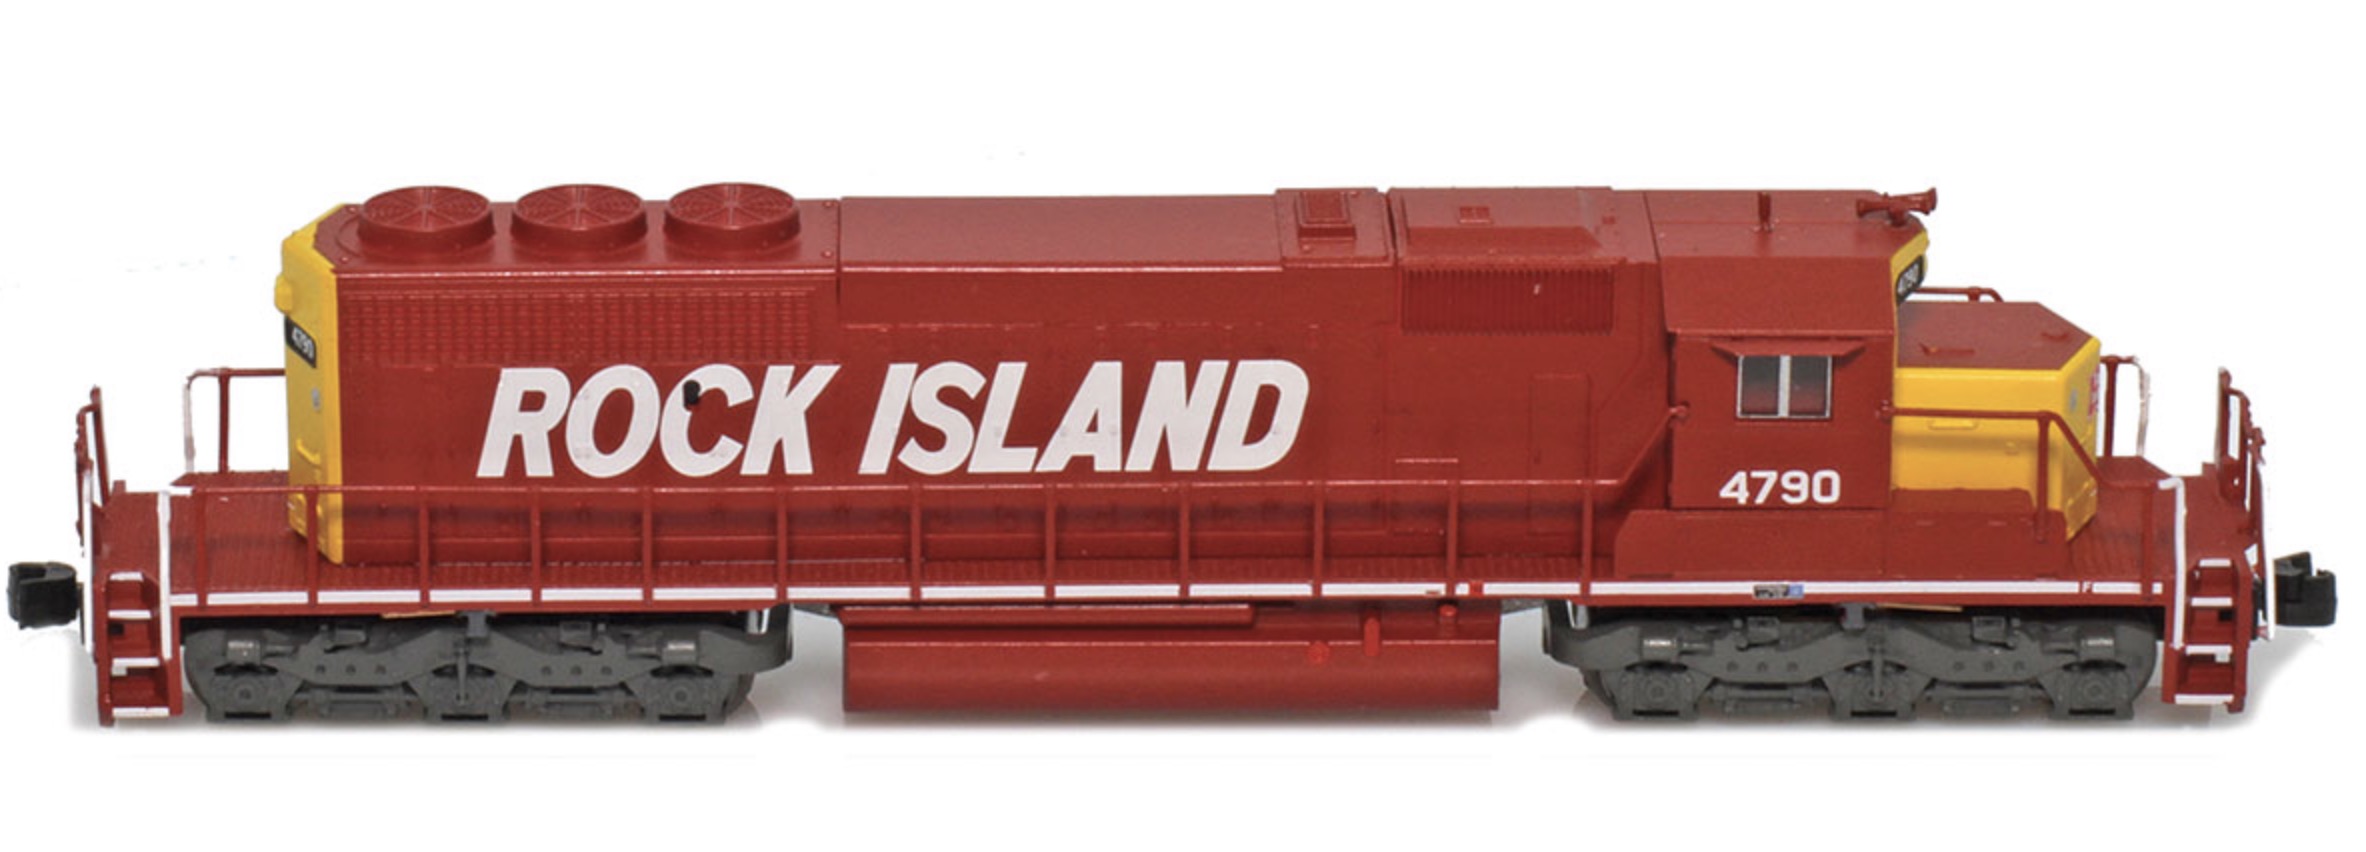 Z Scale - AZL - 64215-1 - Locomotive, Diesel, EMD SD40-2 - Rock Island - 4790